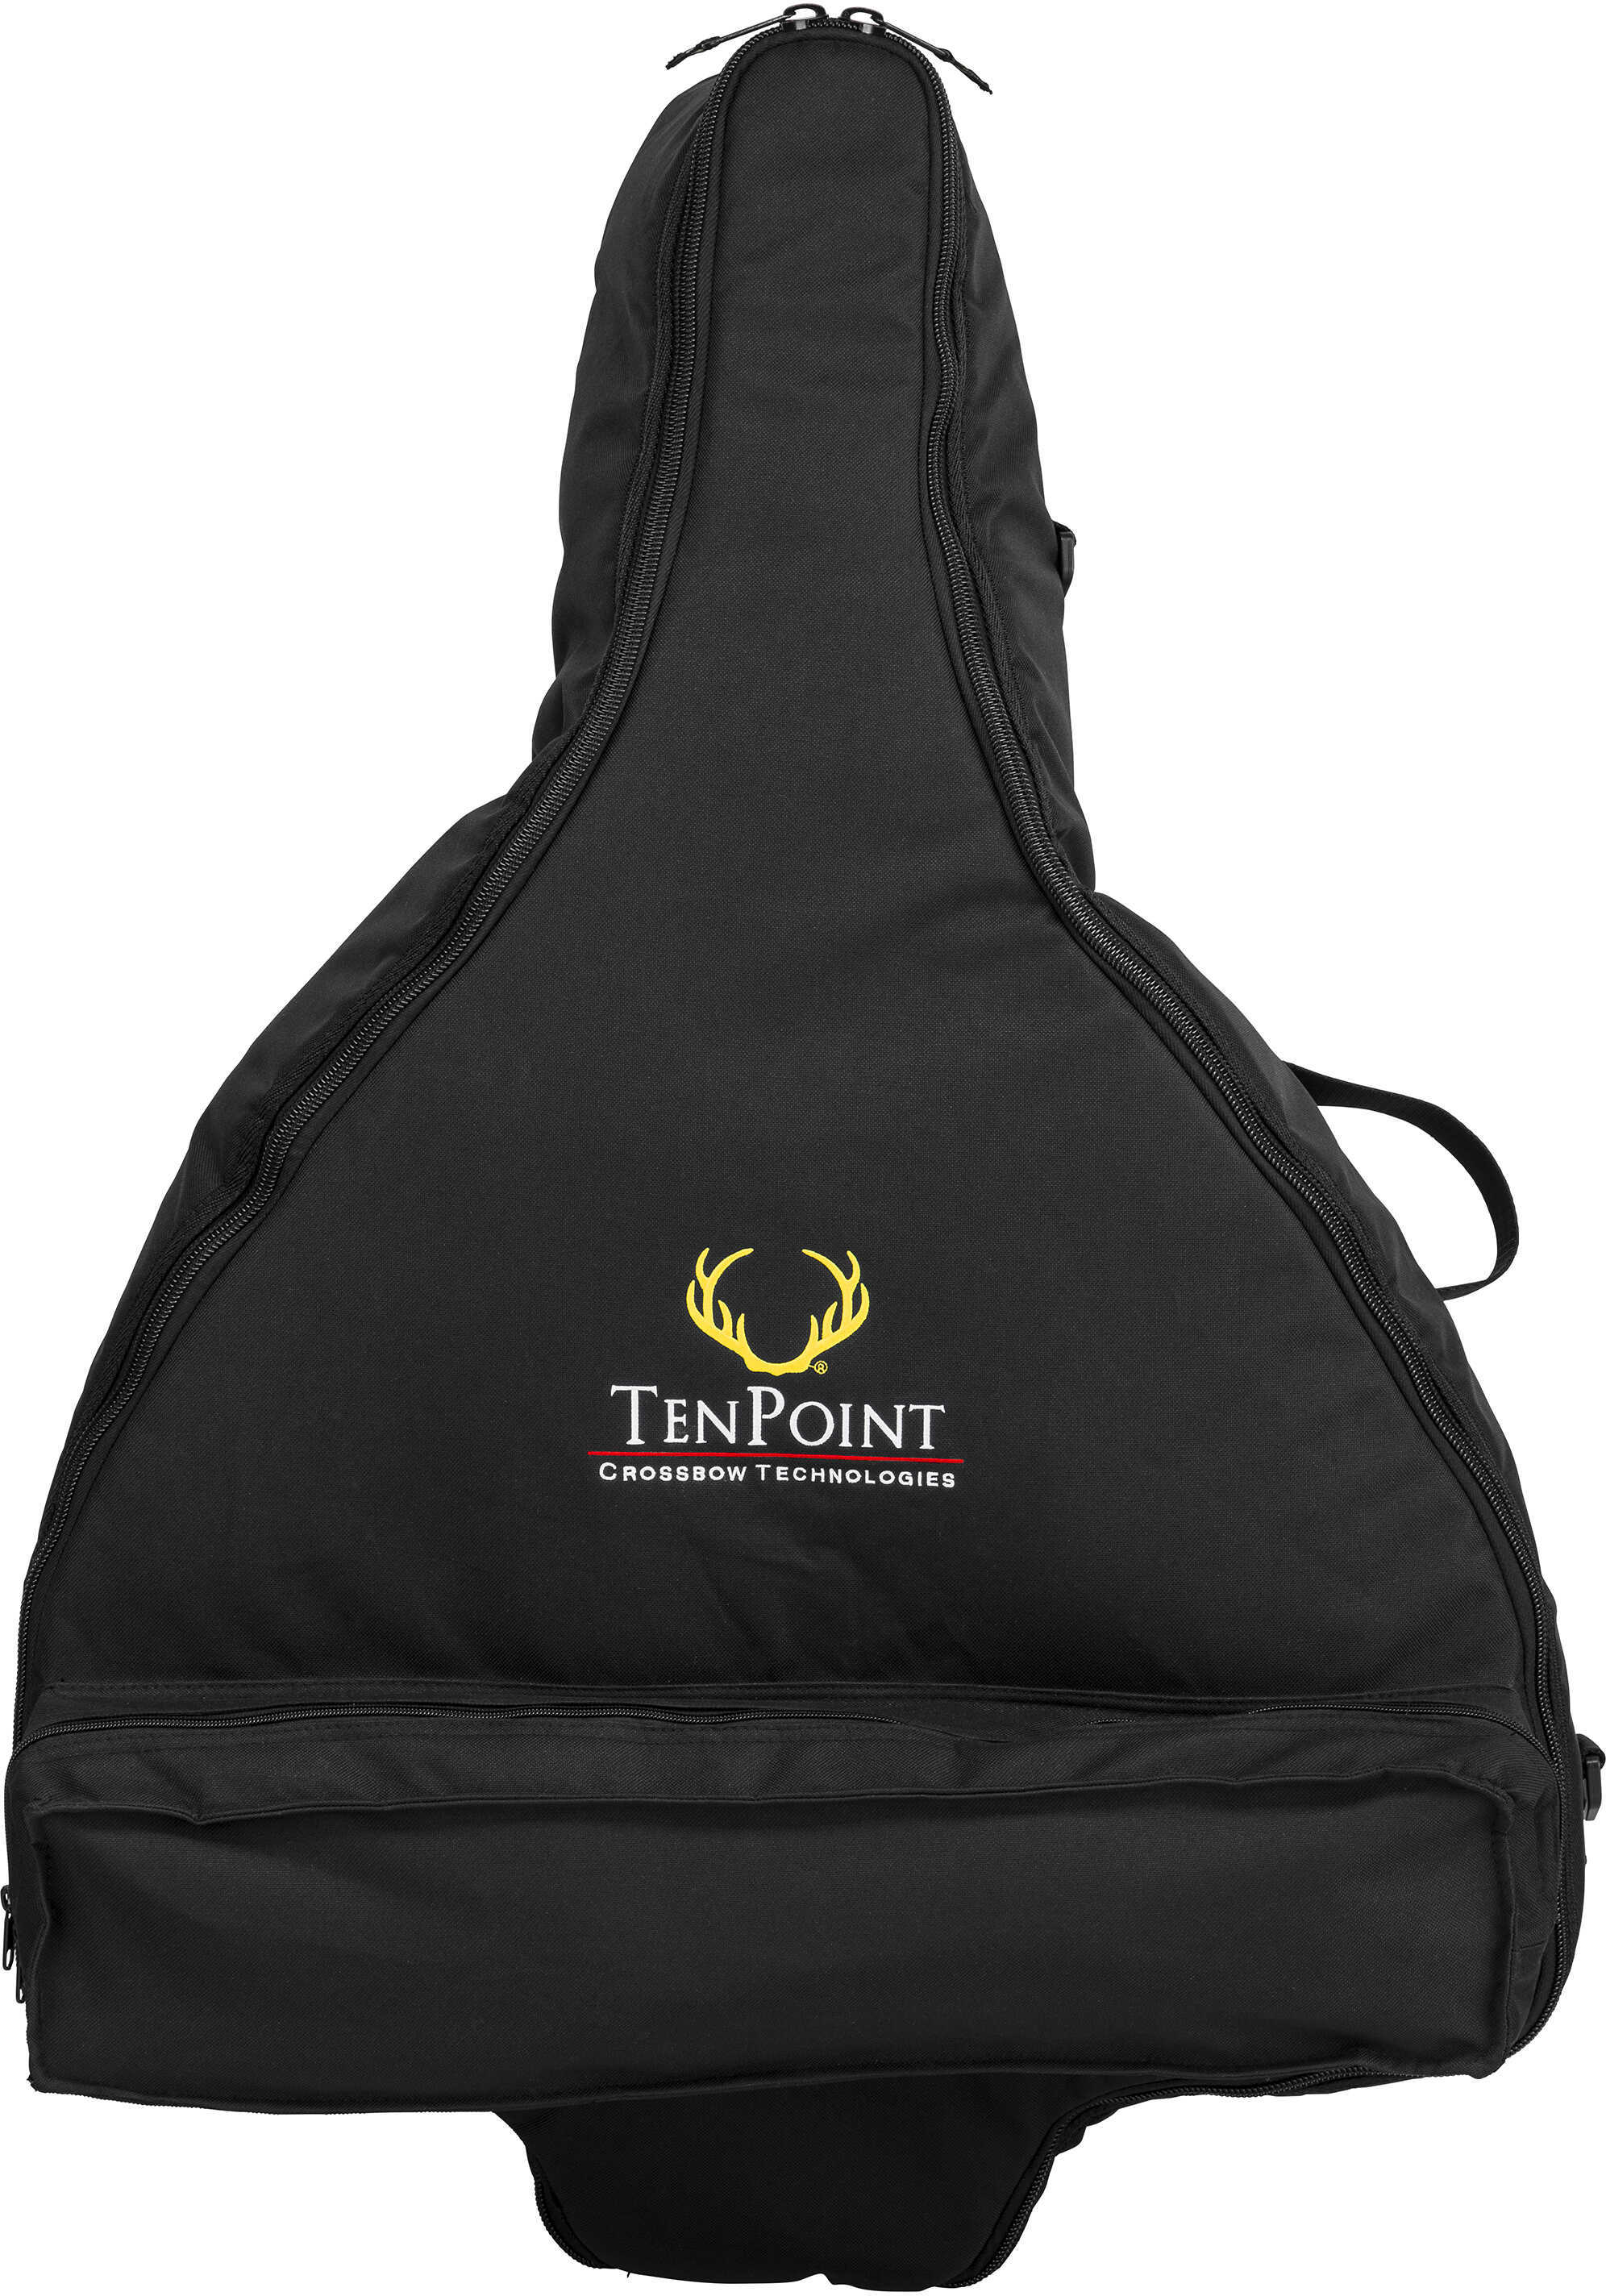 TenPoint Crossbow Technologies Case Soft Universal W/Shoulder Strap Black